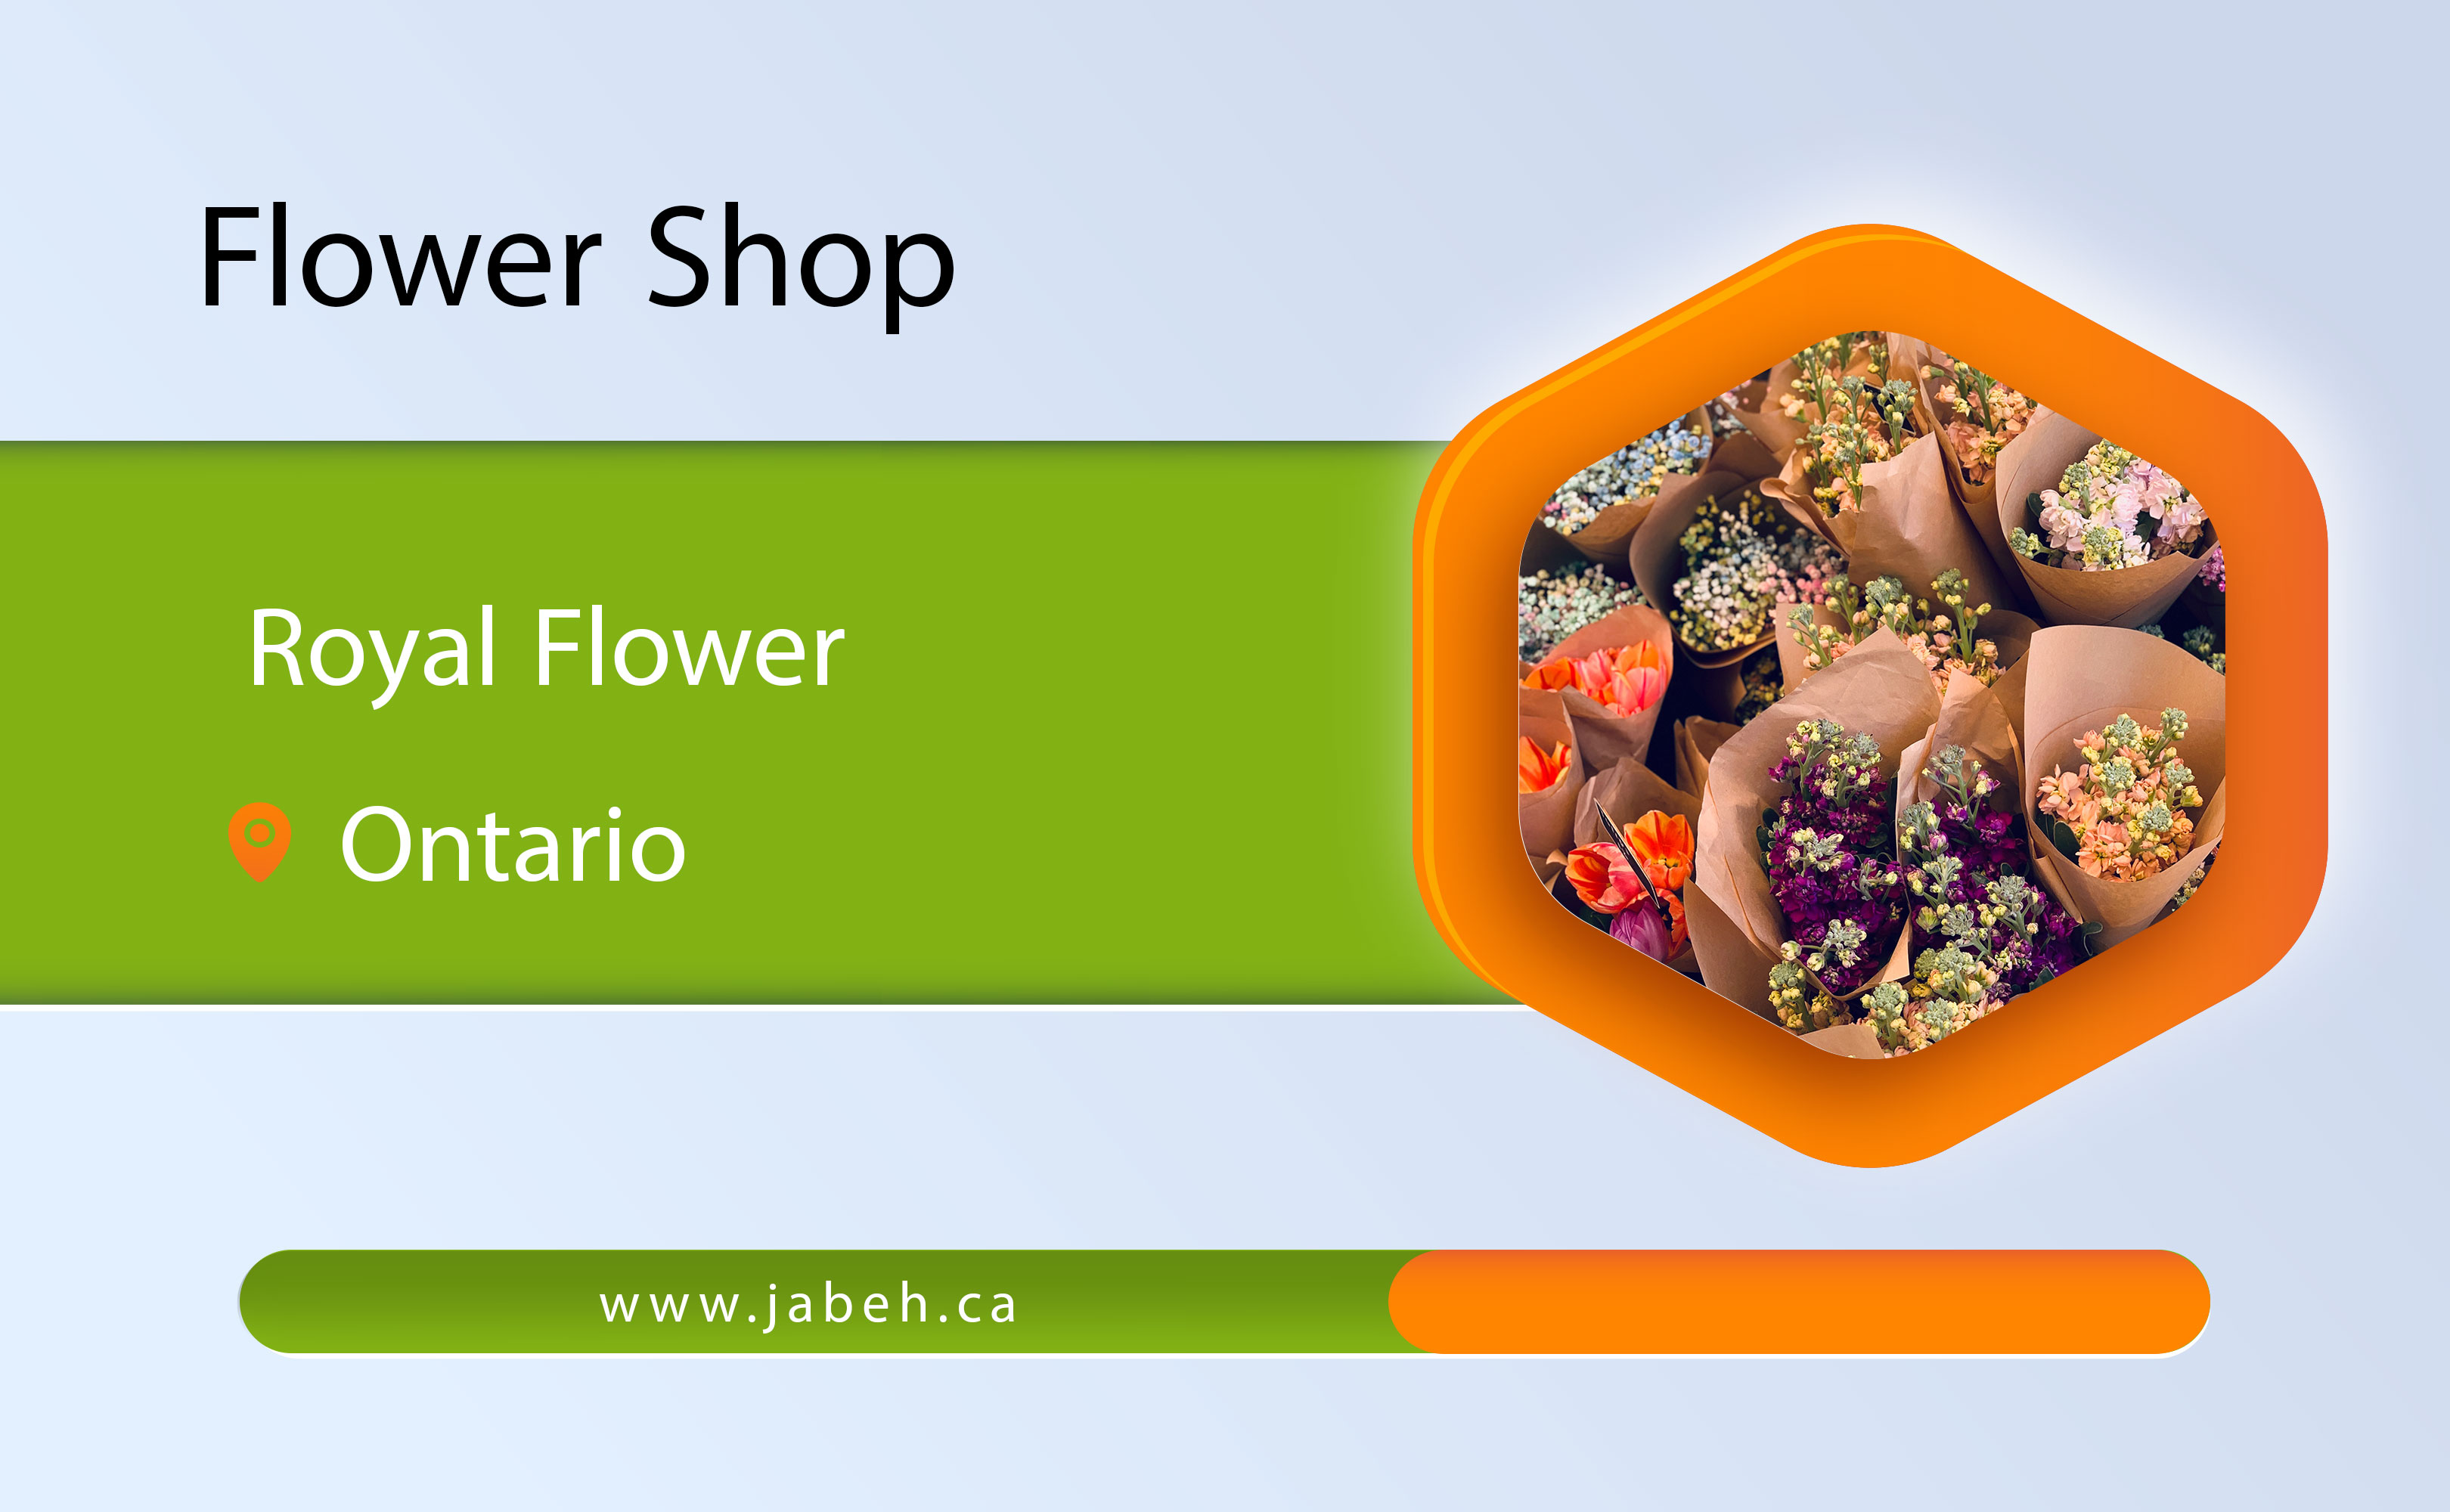 Ontario Royal Flower florist